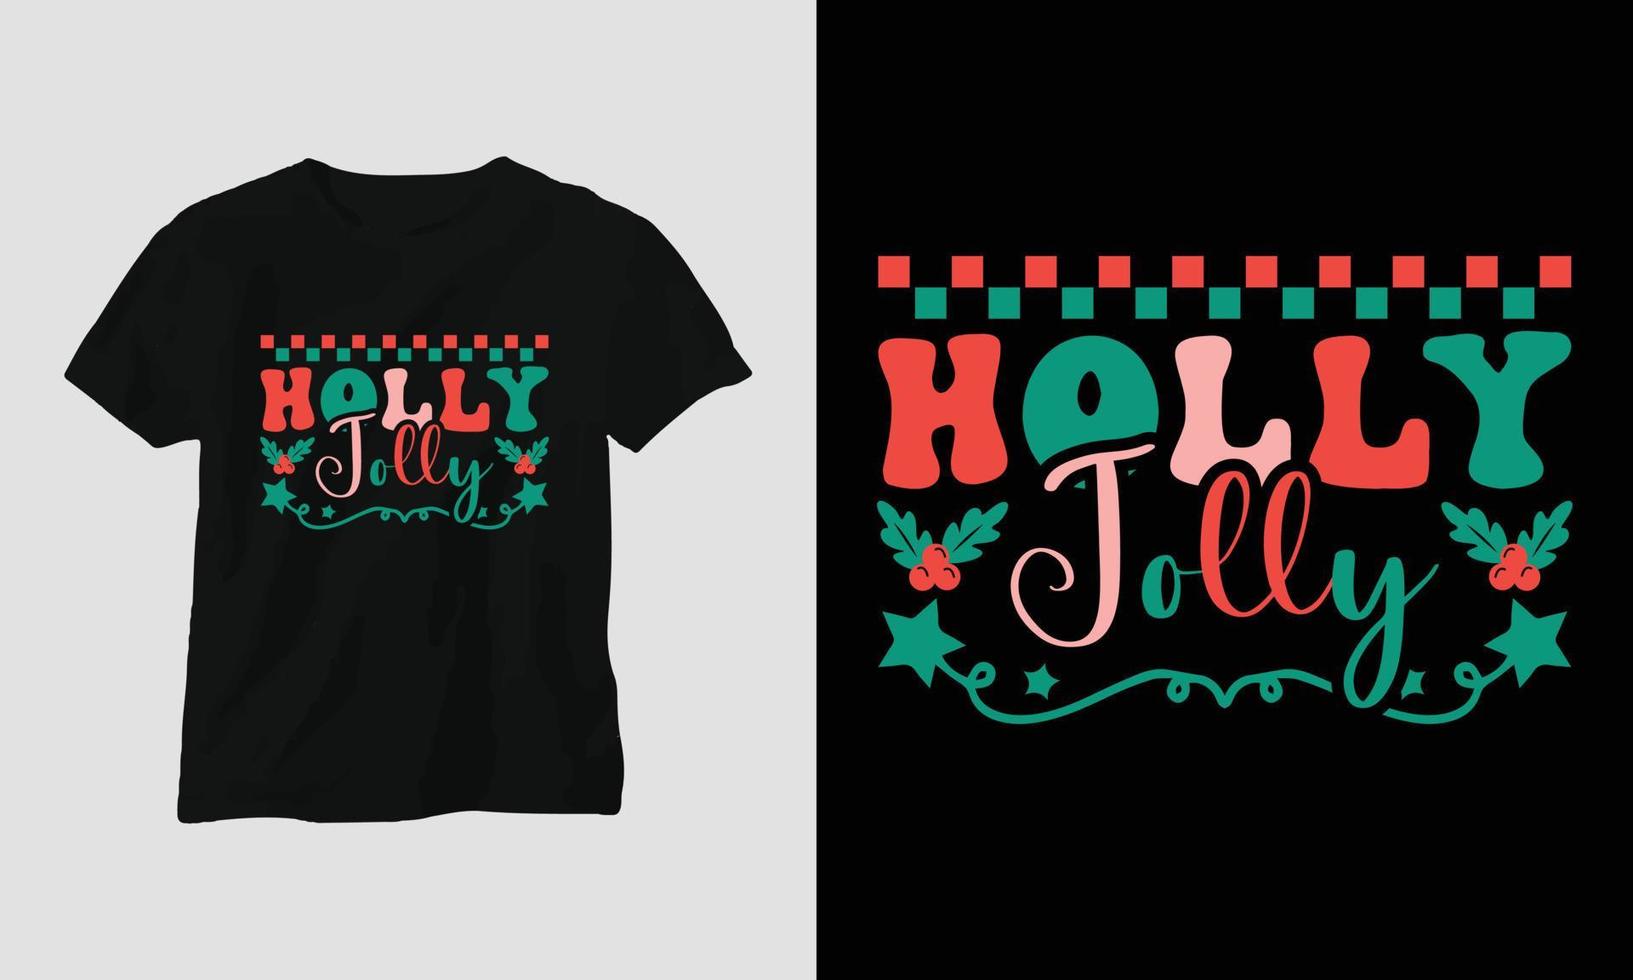 holly jolly - Christmas Retro Groovy t-shirt and apparel design. vector